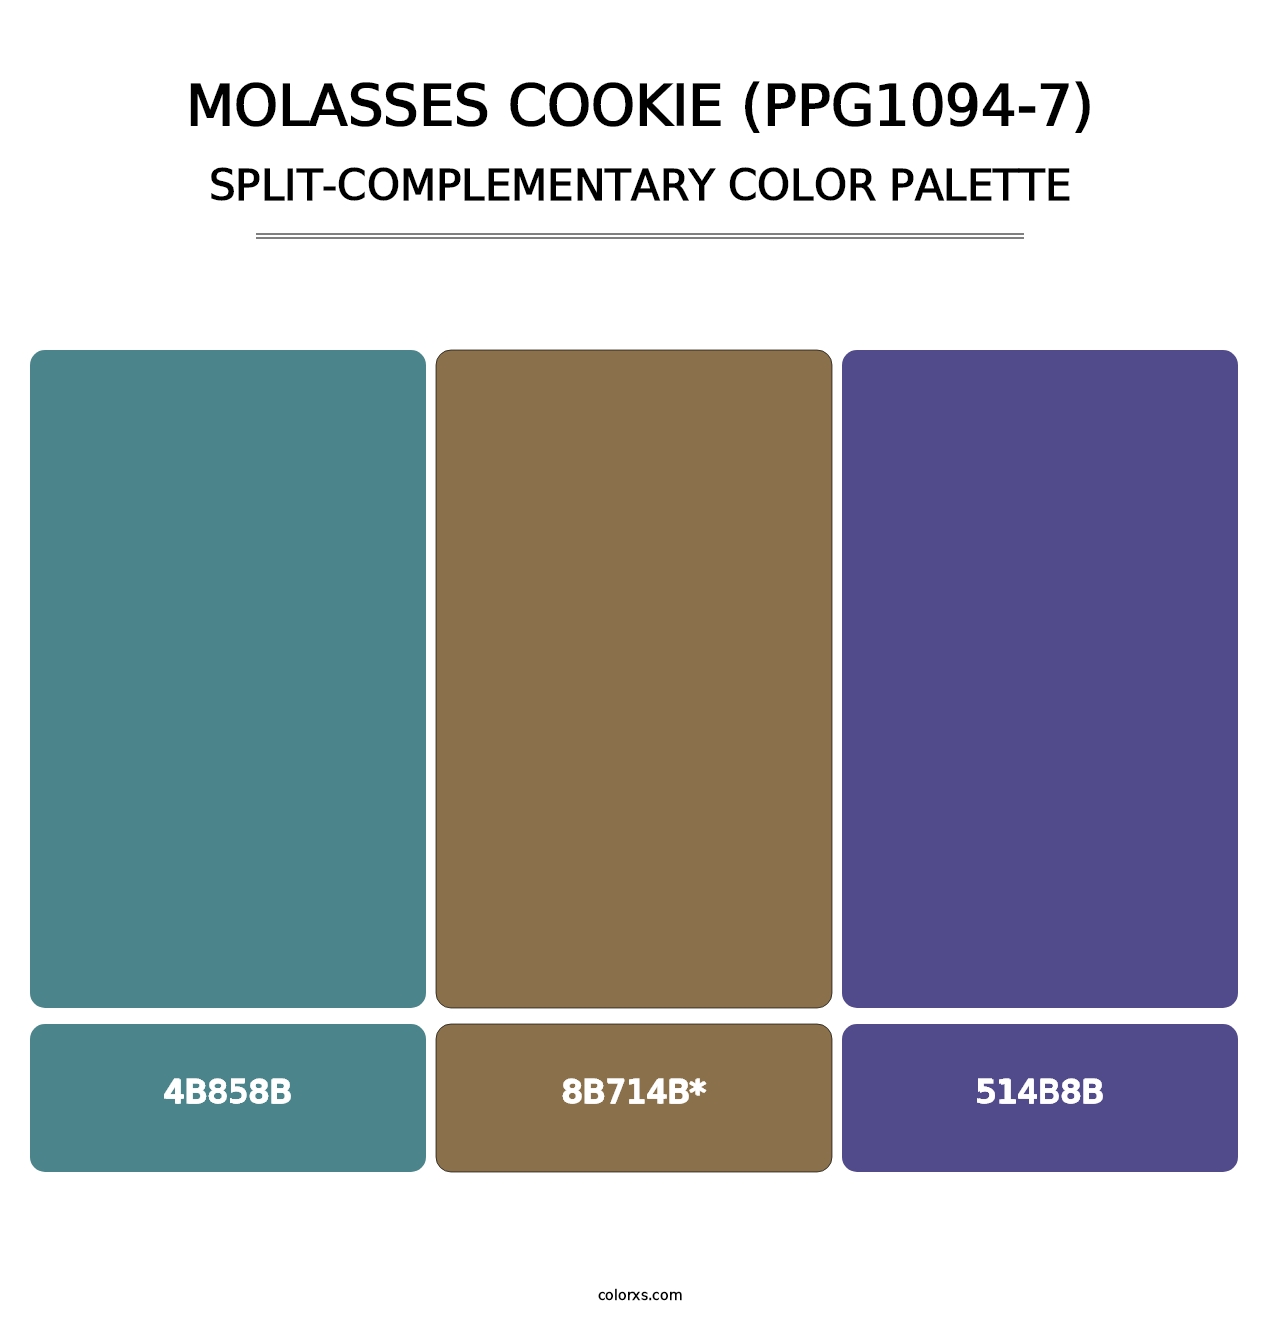 Molasses Cookie (PPG1094-7) - Split-Complementary Color Palette